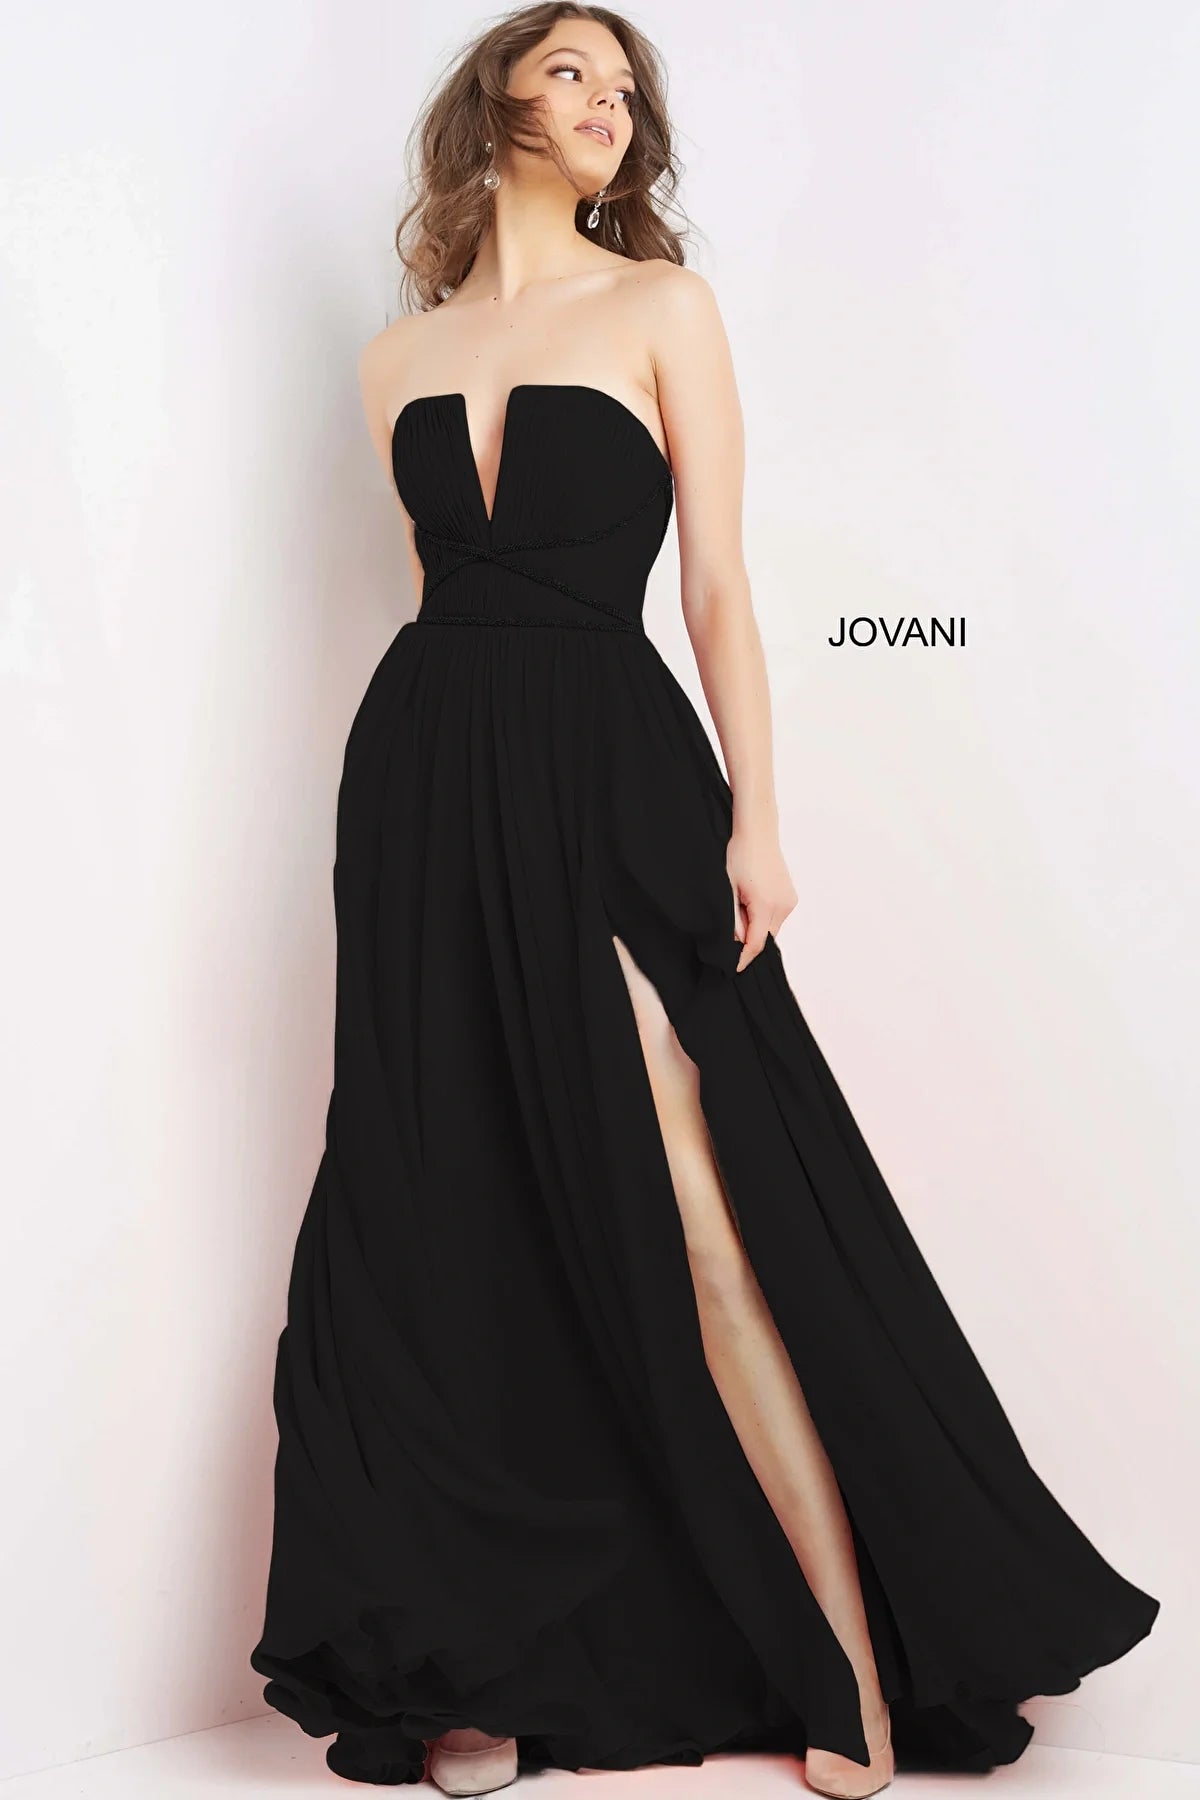 Jovani 05971 Gorgeous Off White Chiffon Strapless Prom Dress B Chic Fashions Long Dress Evening Gowns